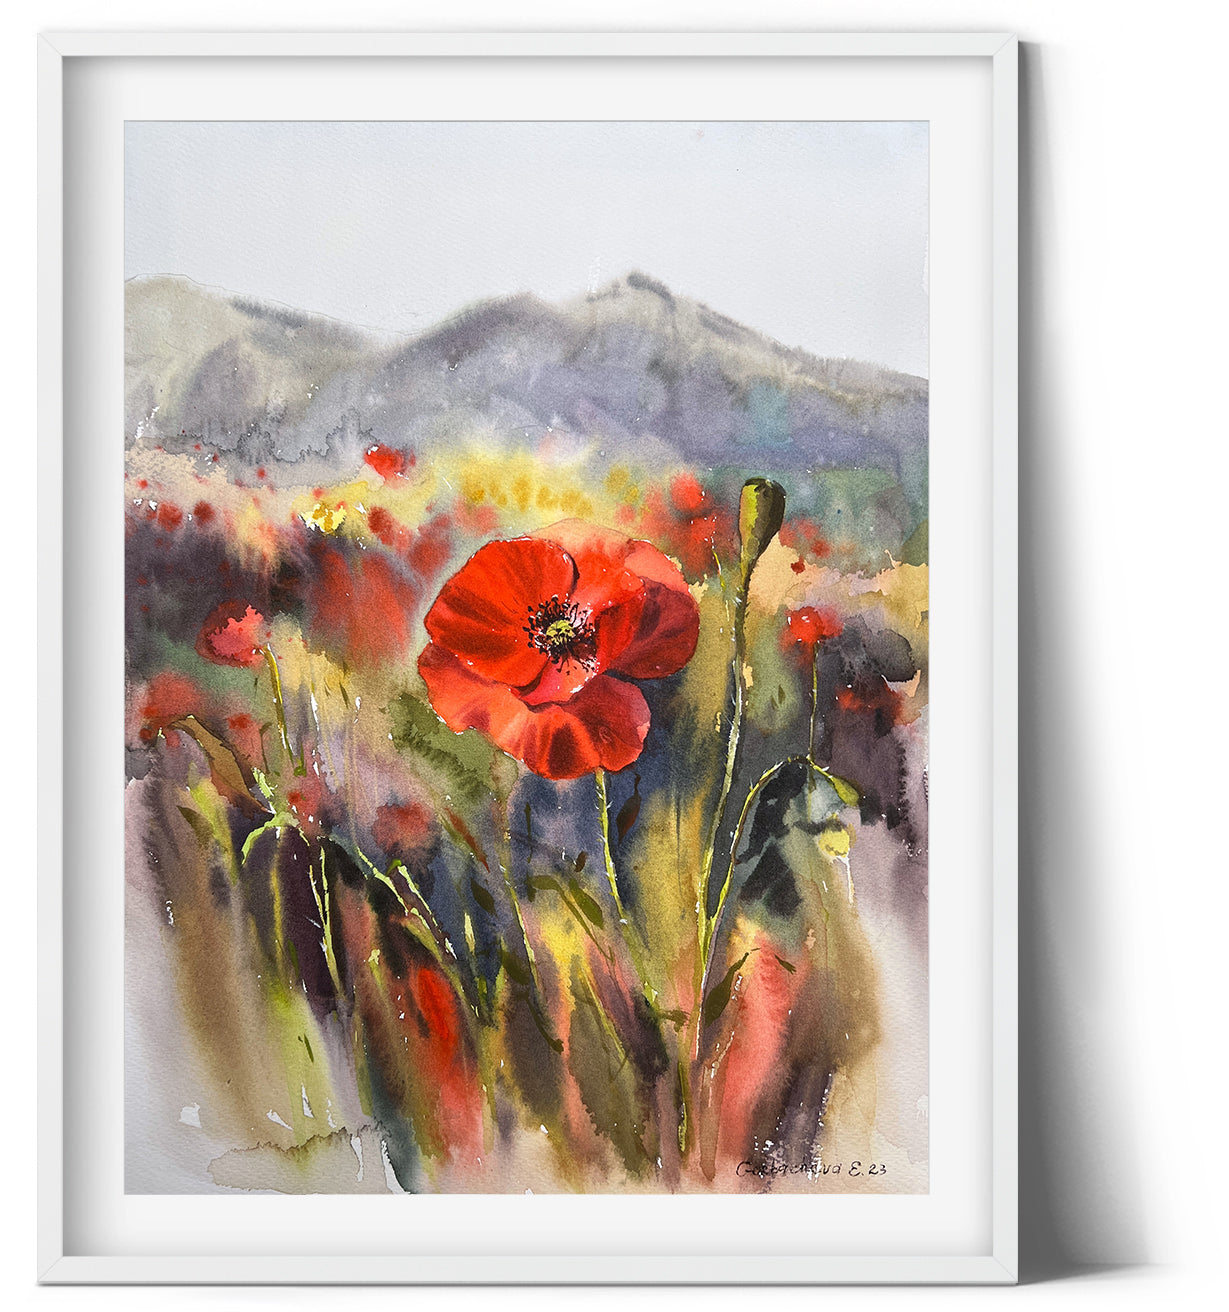 Red Flower Watercolor Painting Original, Californian Poppy Field, Landscape, Kitchen Wall Decor, Botanical Art, Gift